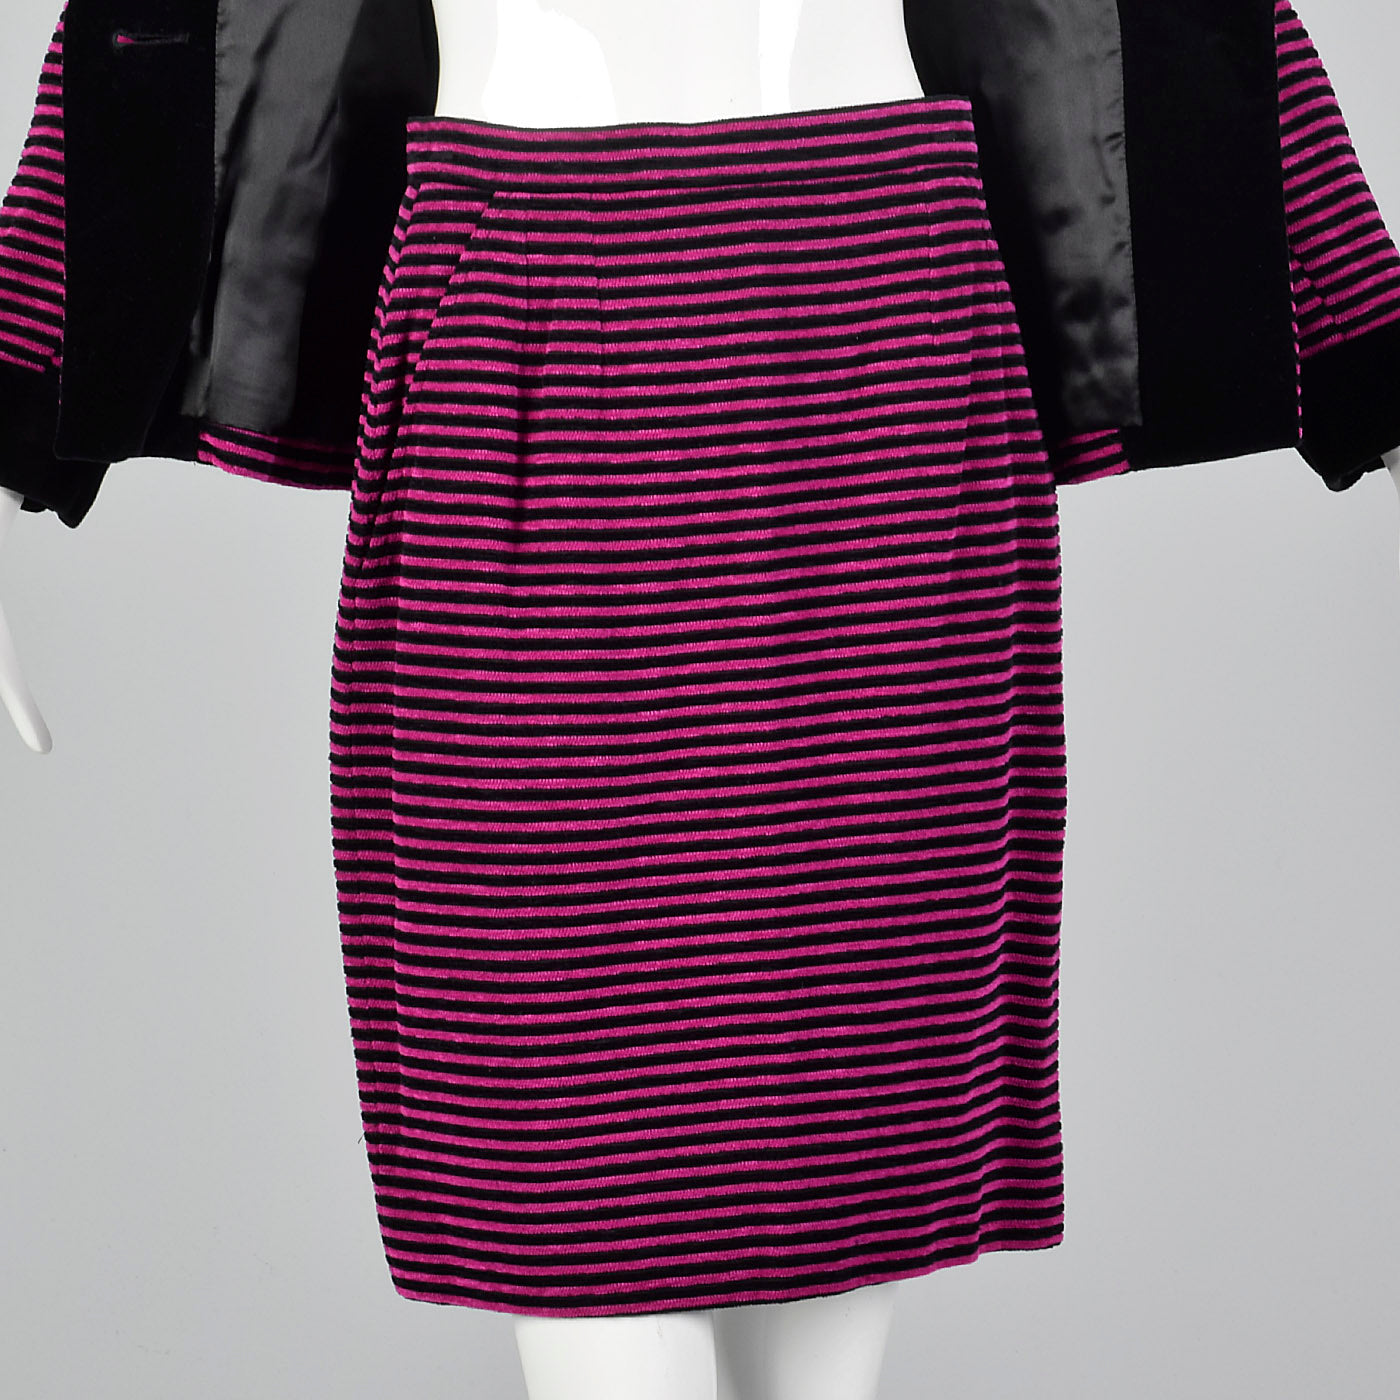 Yves Saint Laurent Rive Gauche Black & Fuchsia Striped Corduroy Skirt Suit